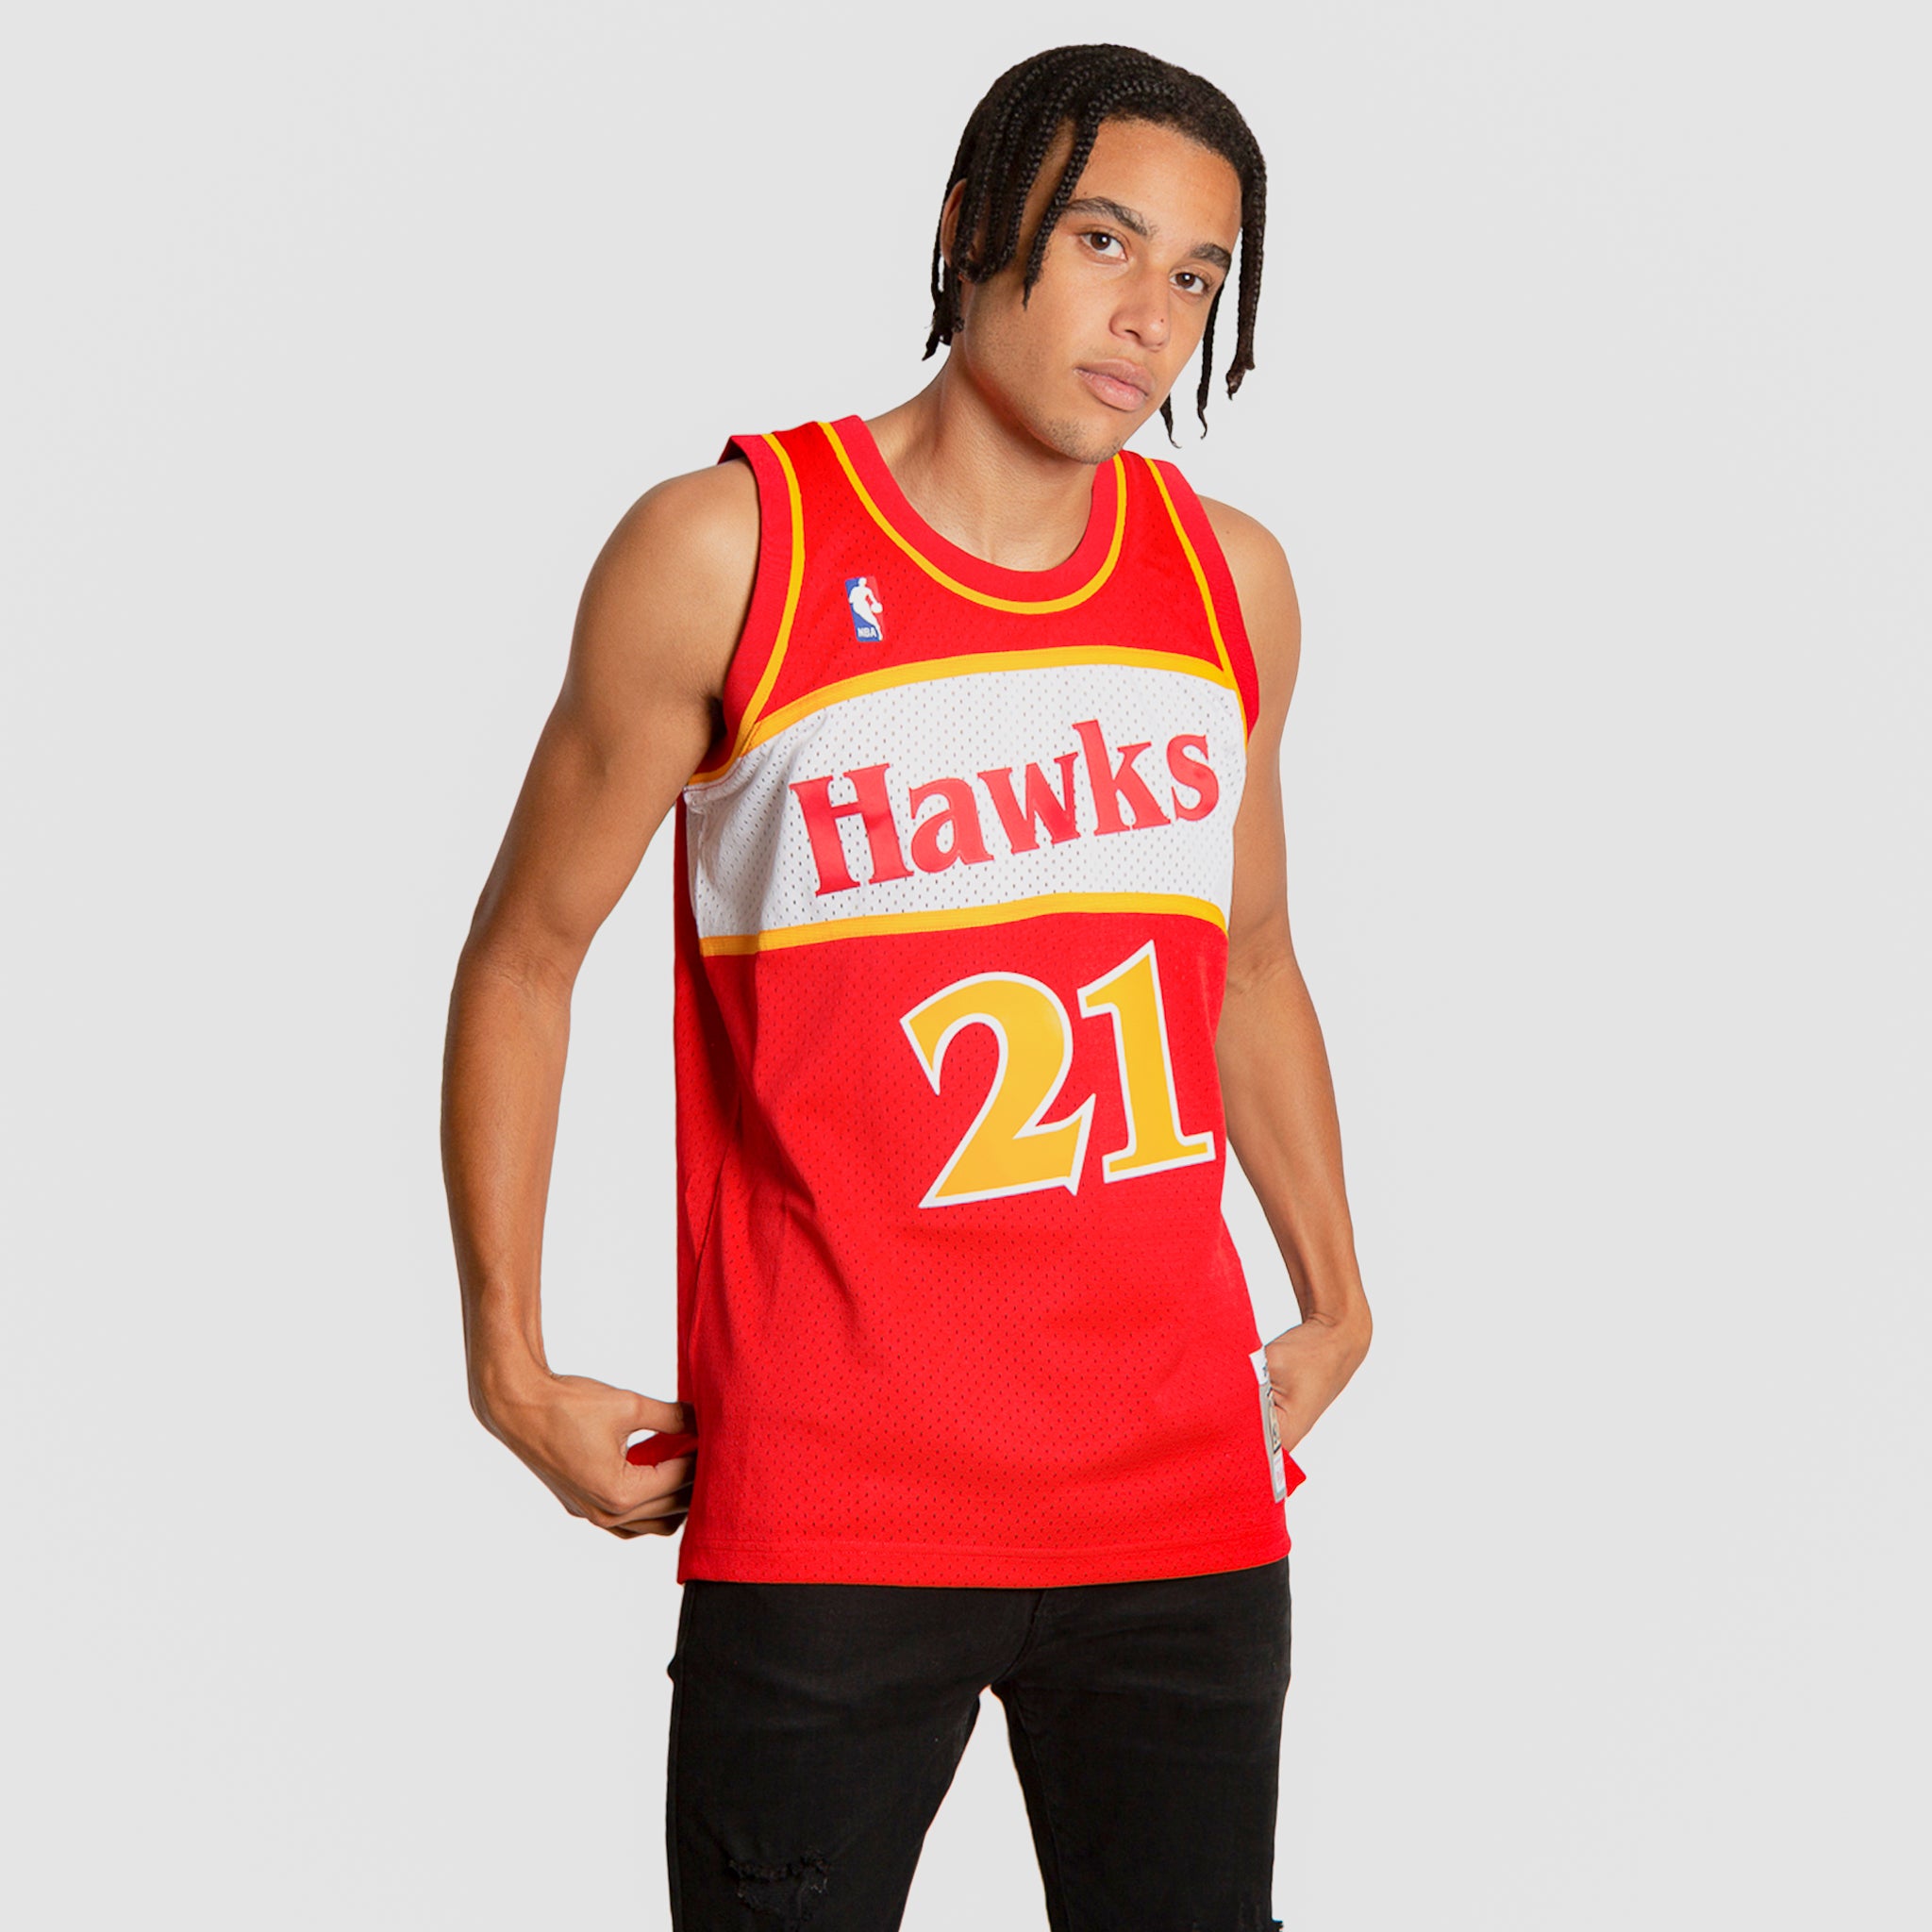 Hawks Throwback Jersey Concept : r/AtlantaHawks